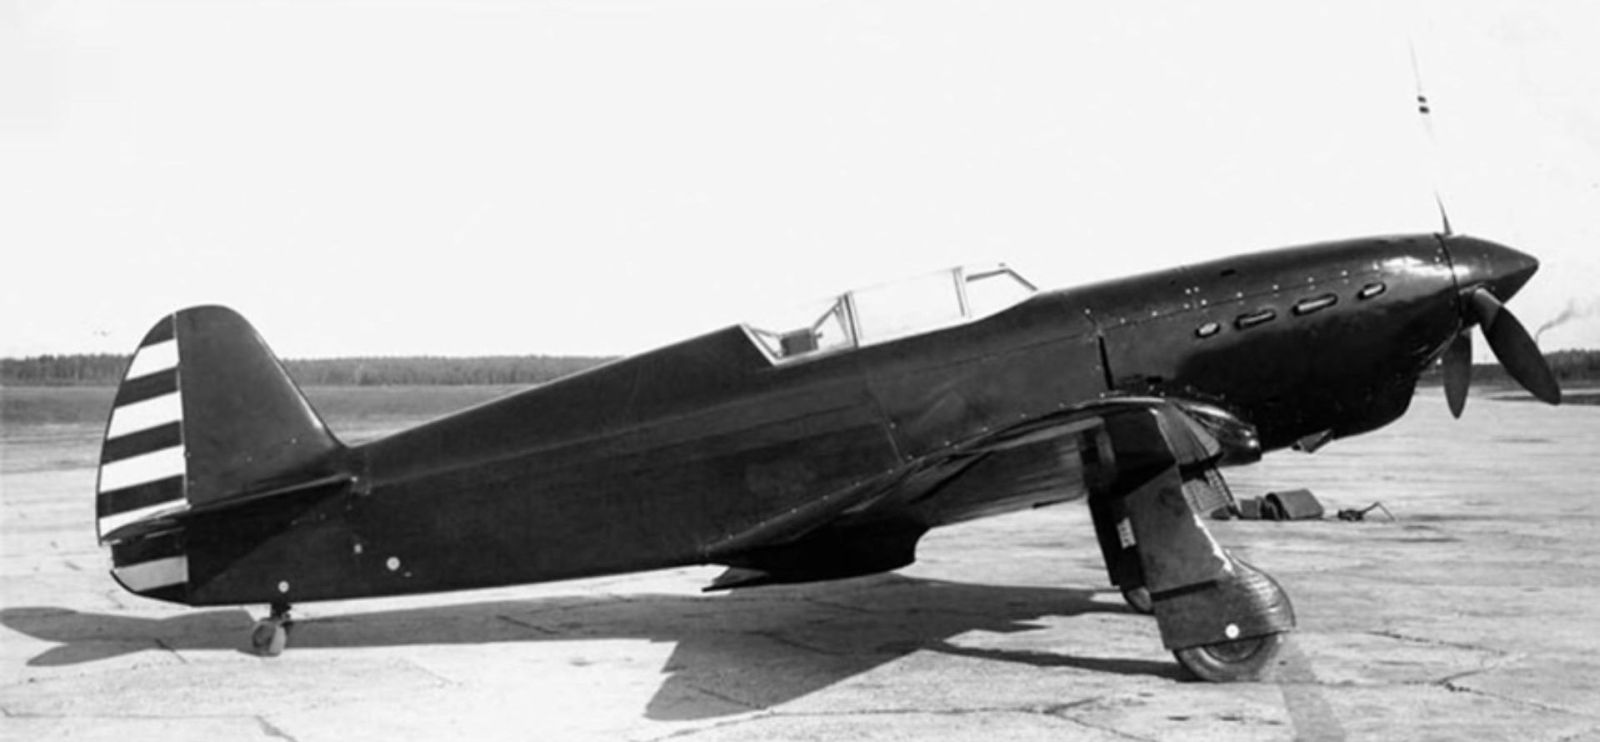 Yakovlev I-26-II ( Yak-1 prototype ), trials in 1940